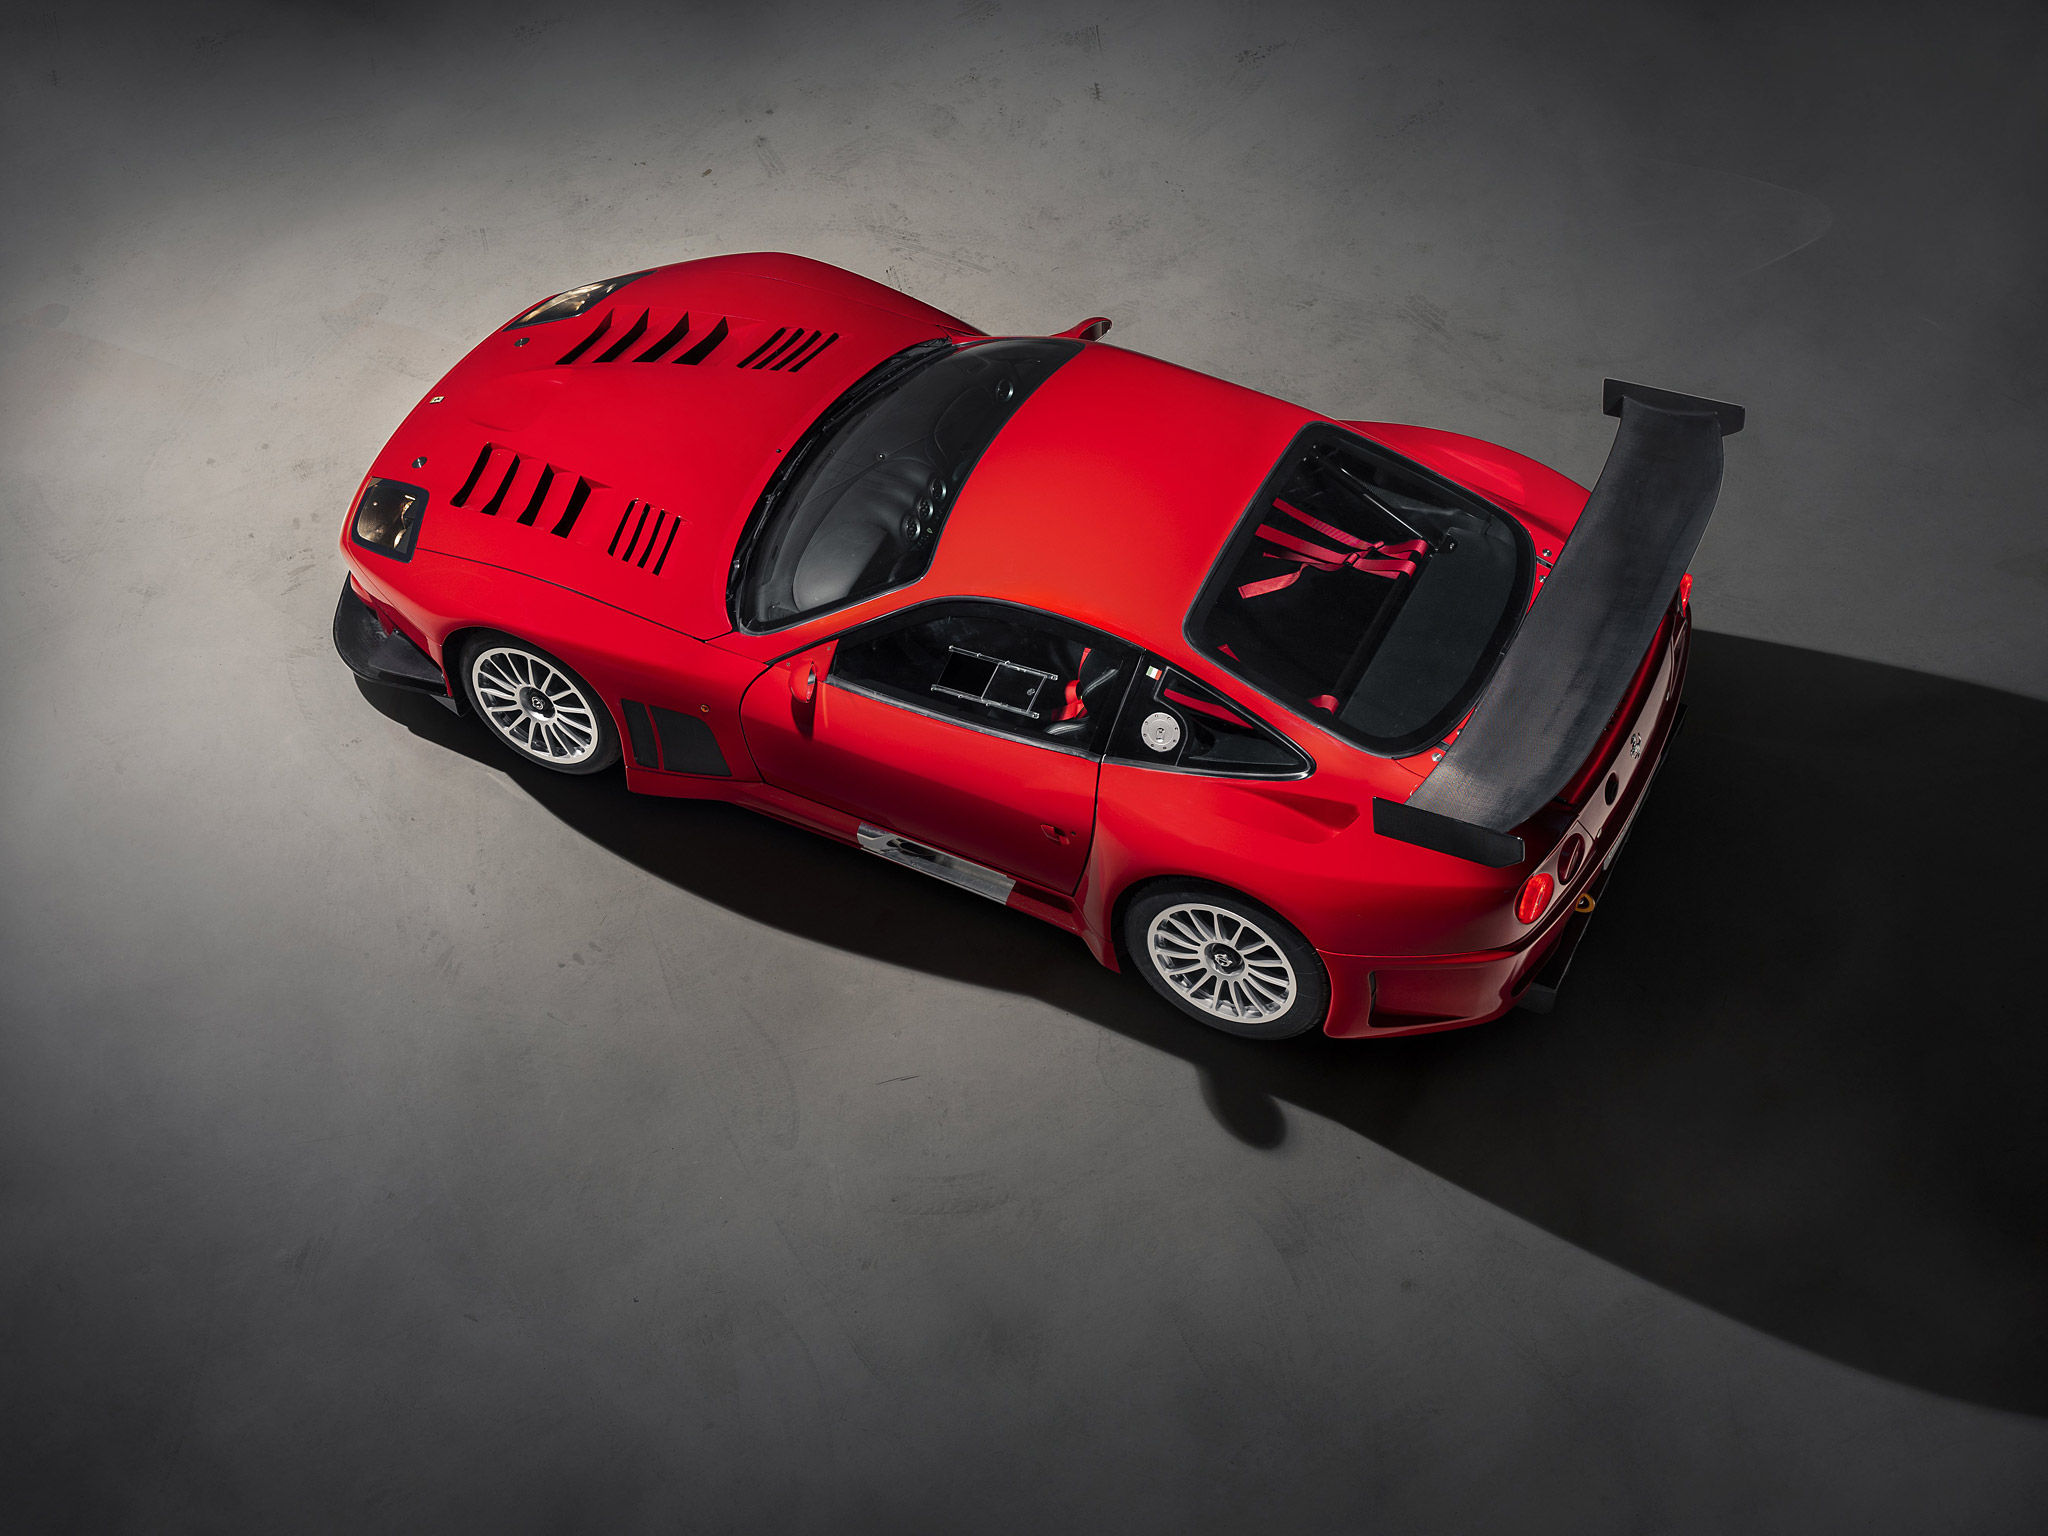  2003 Ferrari 575 GTC Stradale Wallpaper.